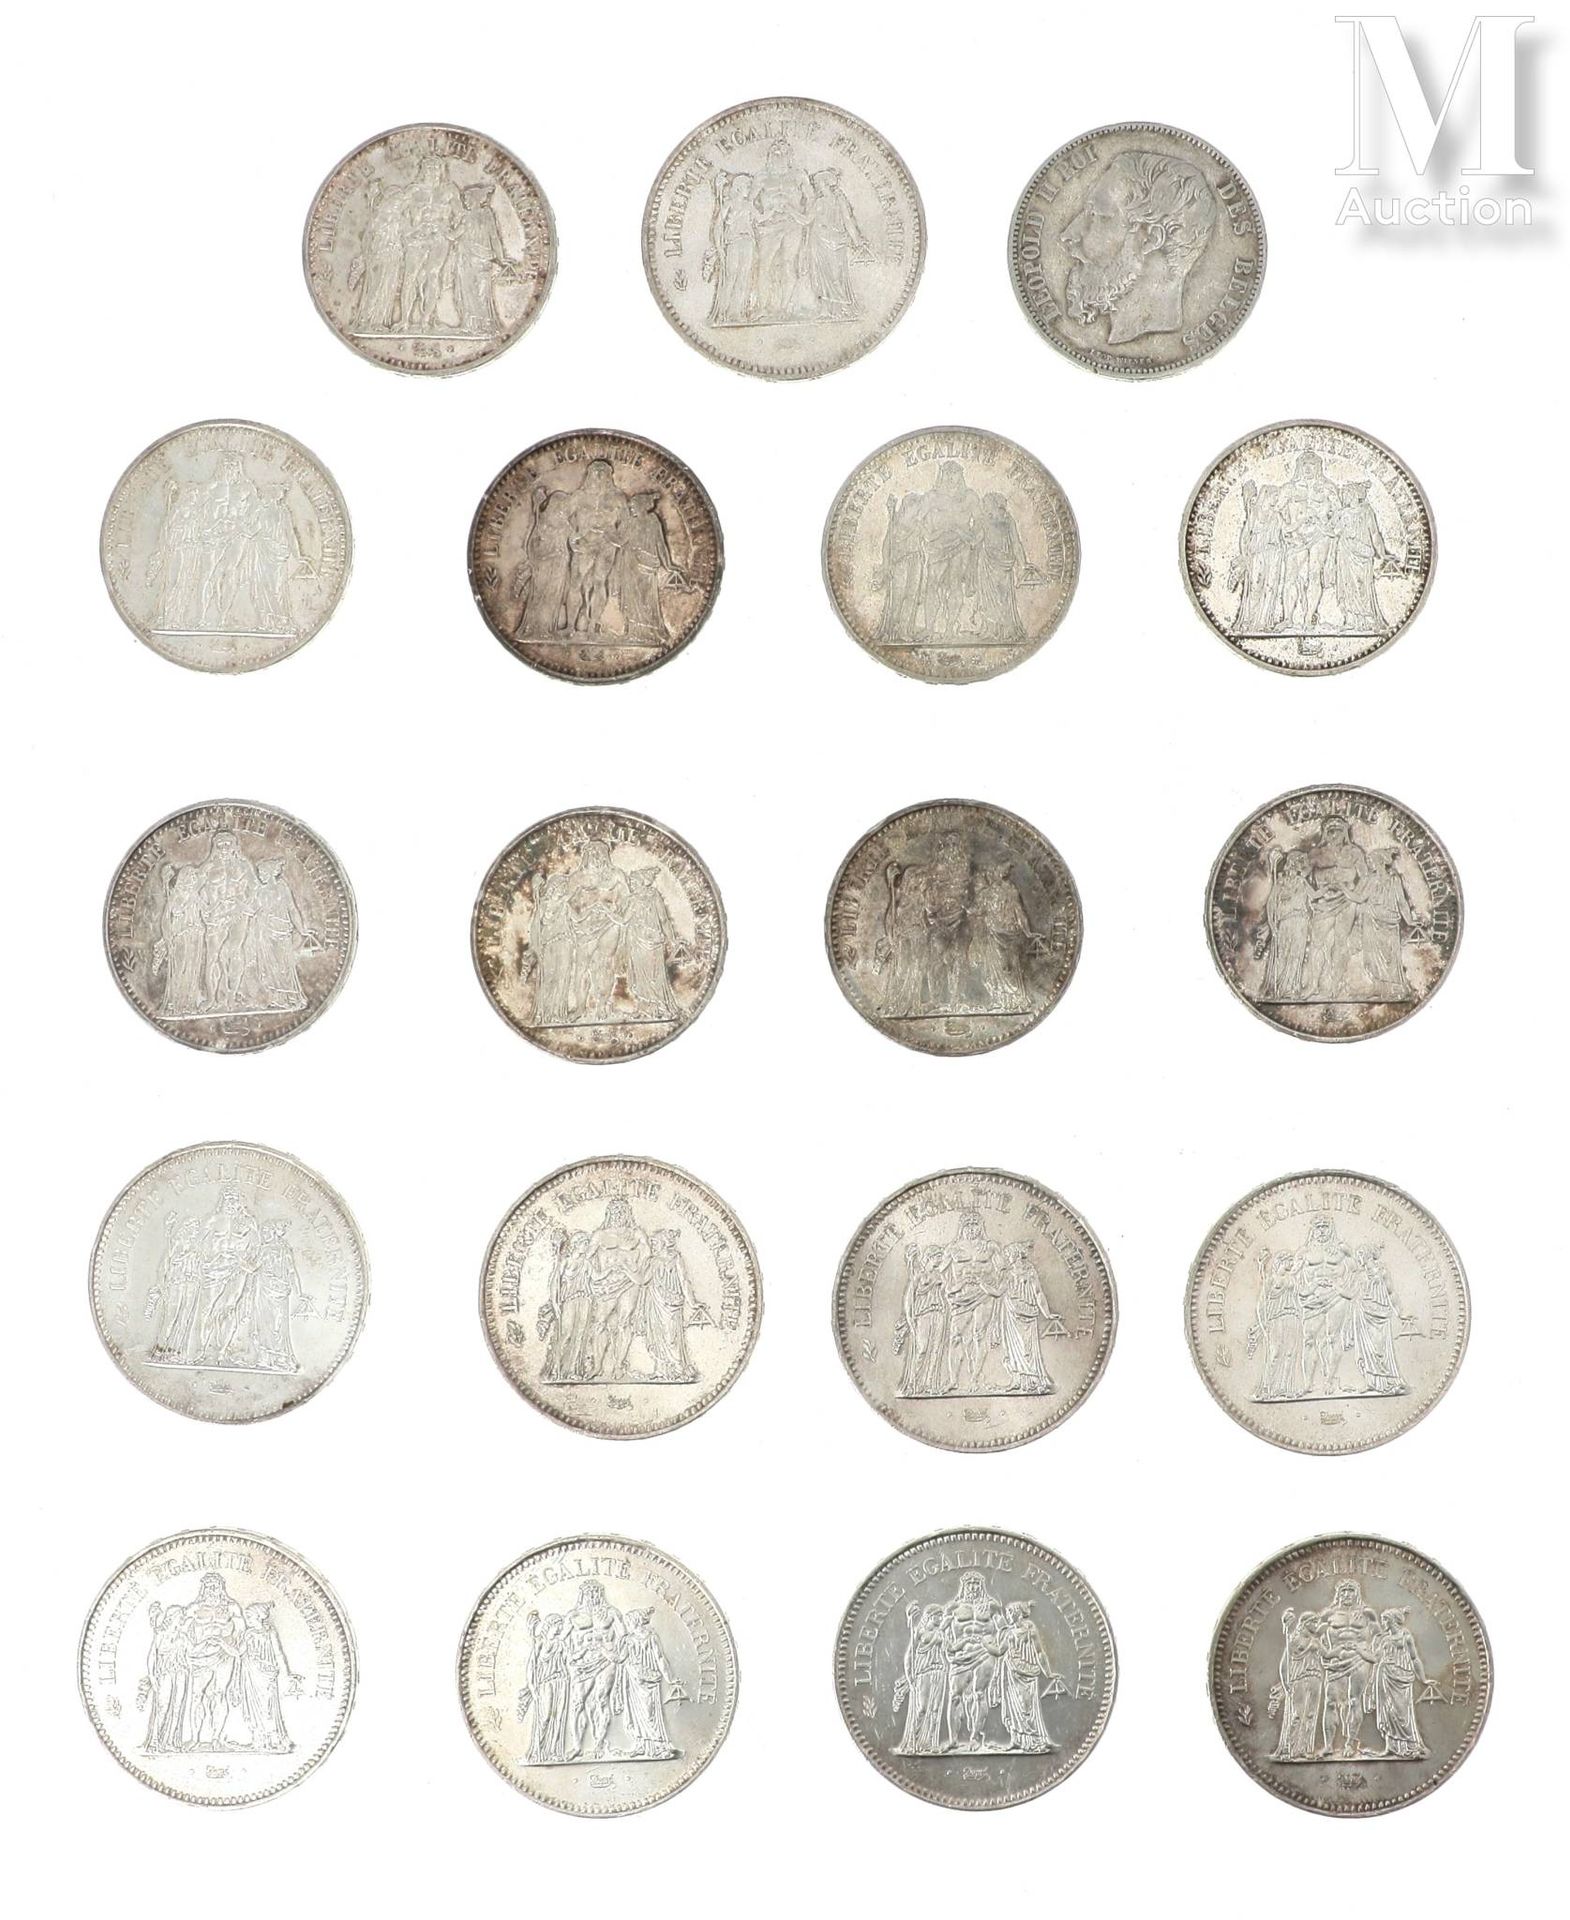 Lot de pièces en argent Lot of silver coins including:
- 9 x 50 FF Hercules (197&hellip;